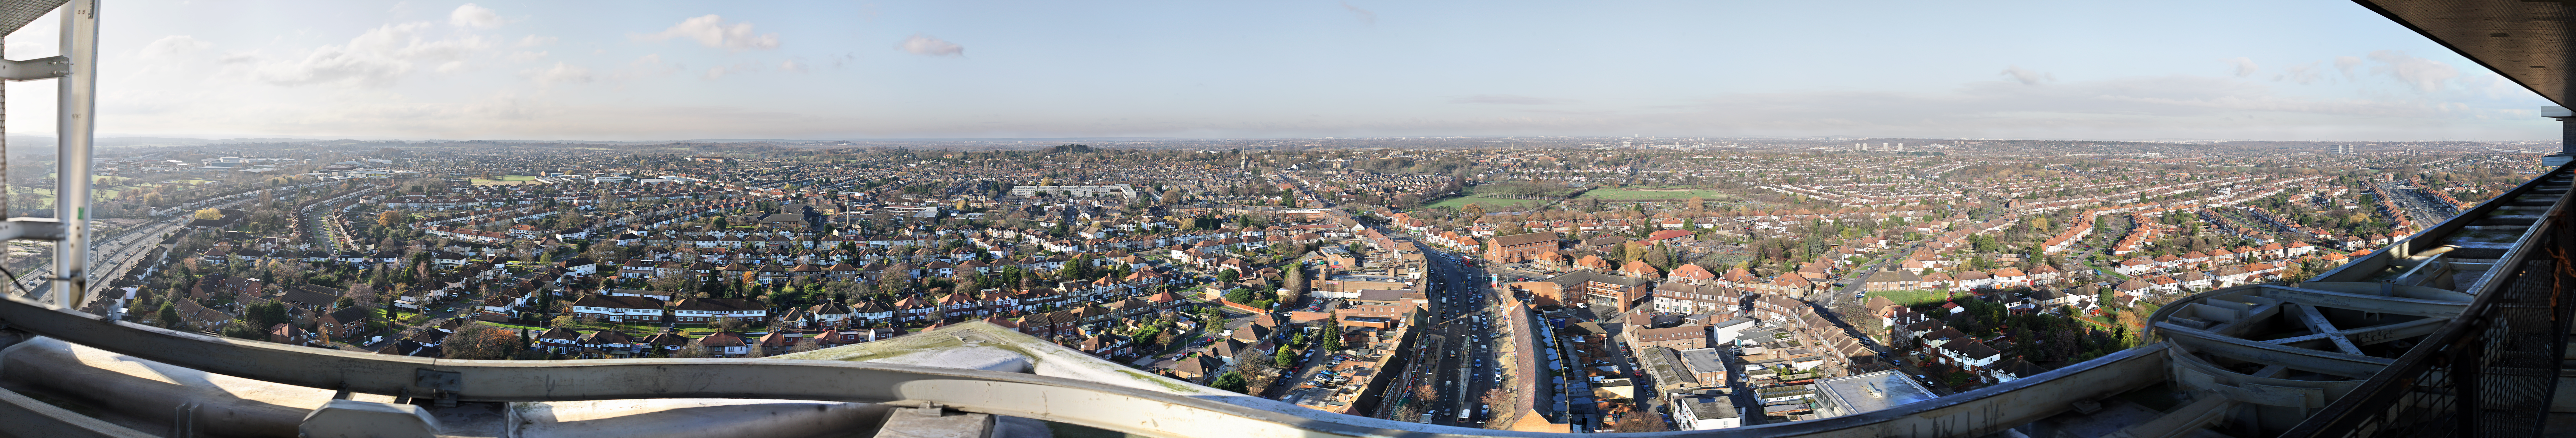 Tolworth_tower_gigapixel_panorama.jpg